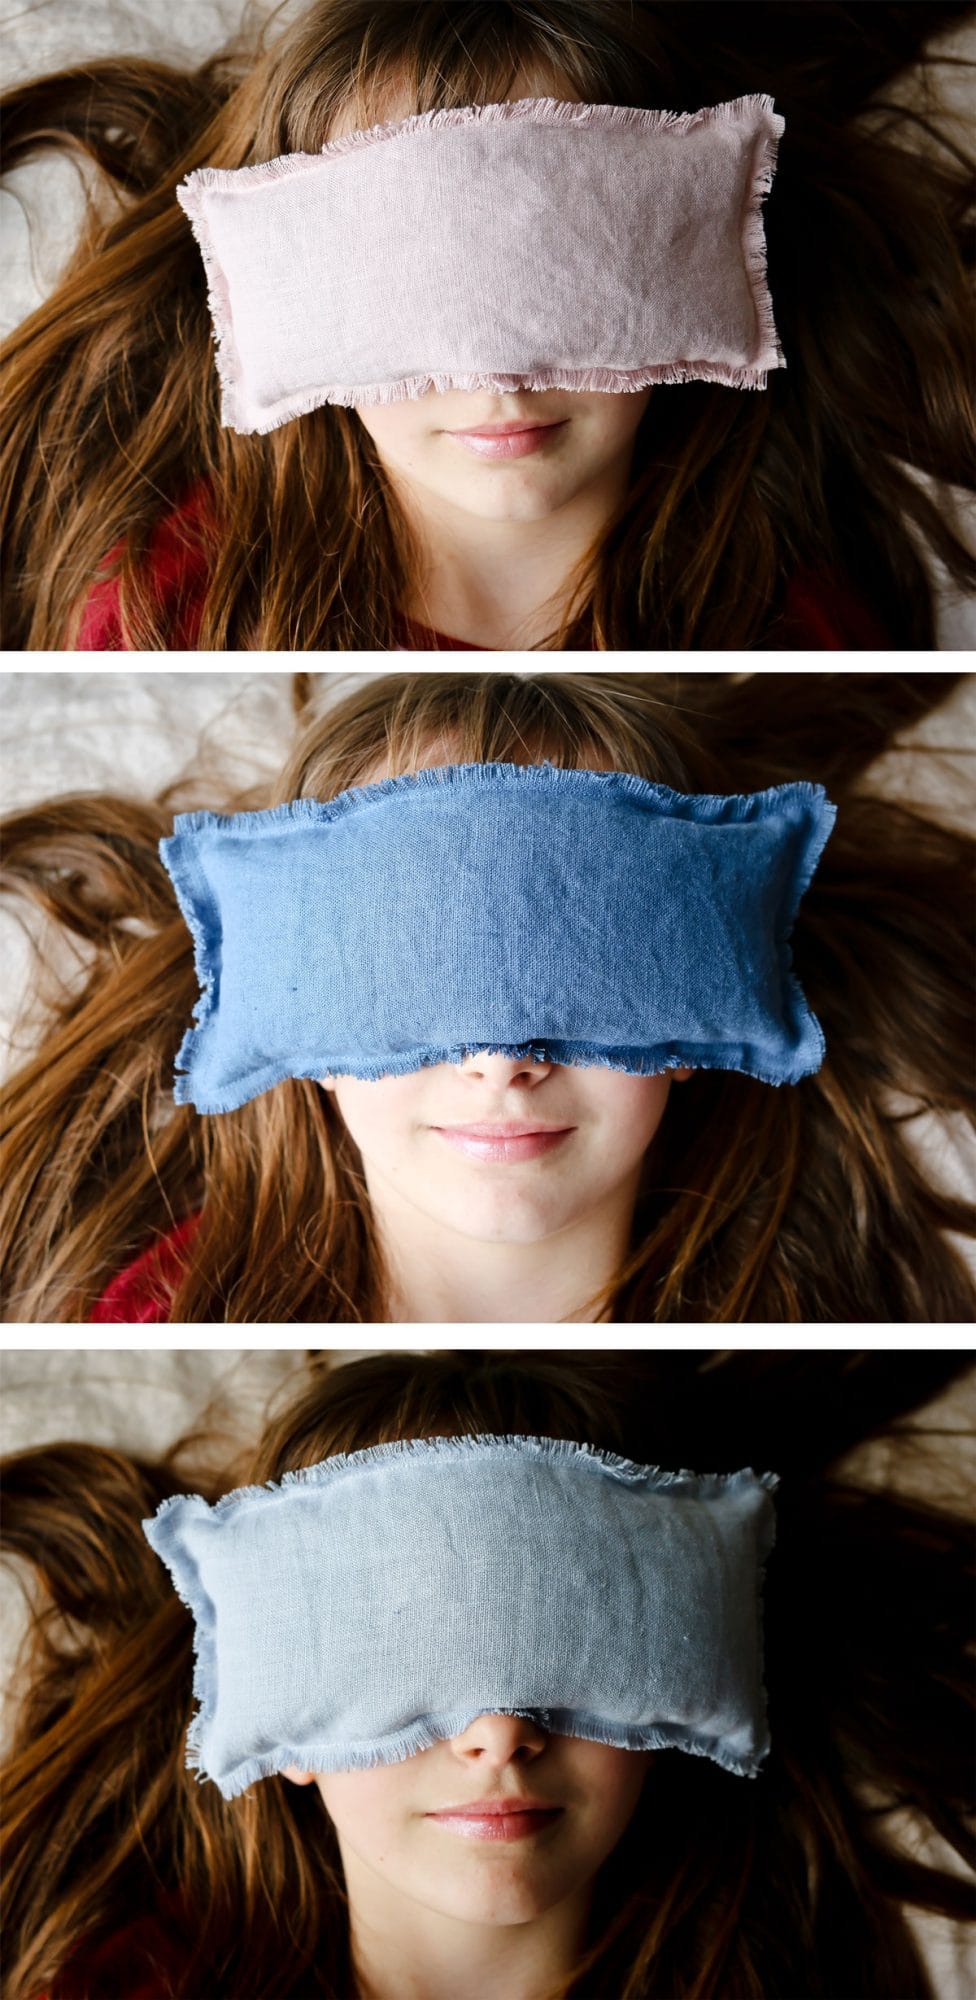 DIY Linen Lavender Eye Pillows